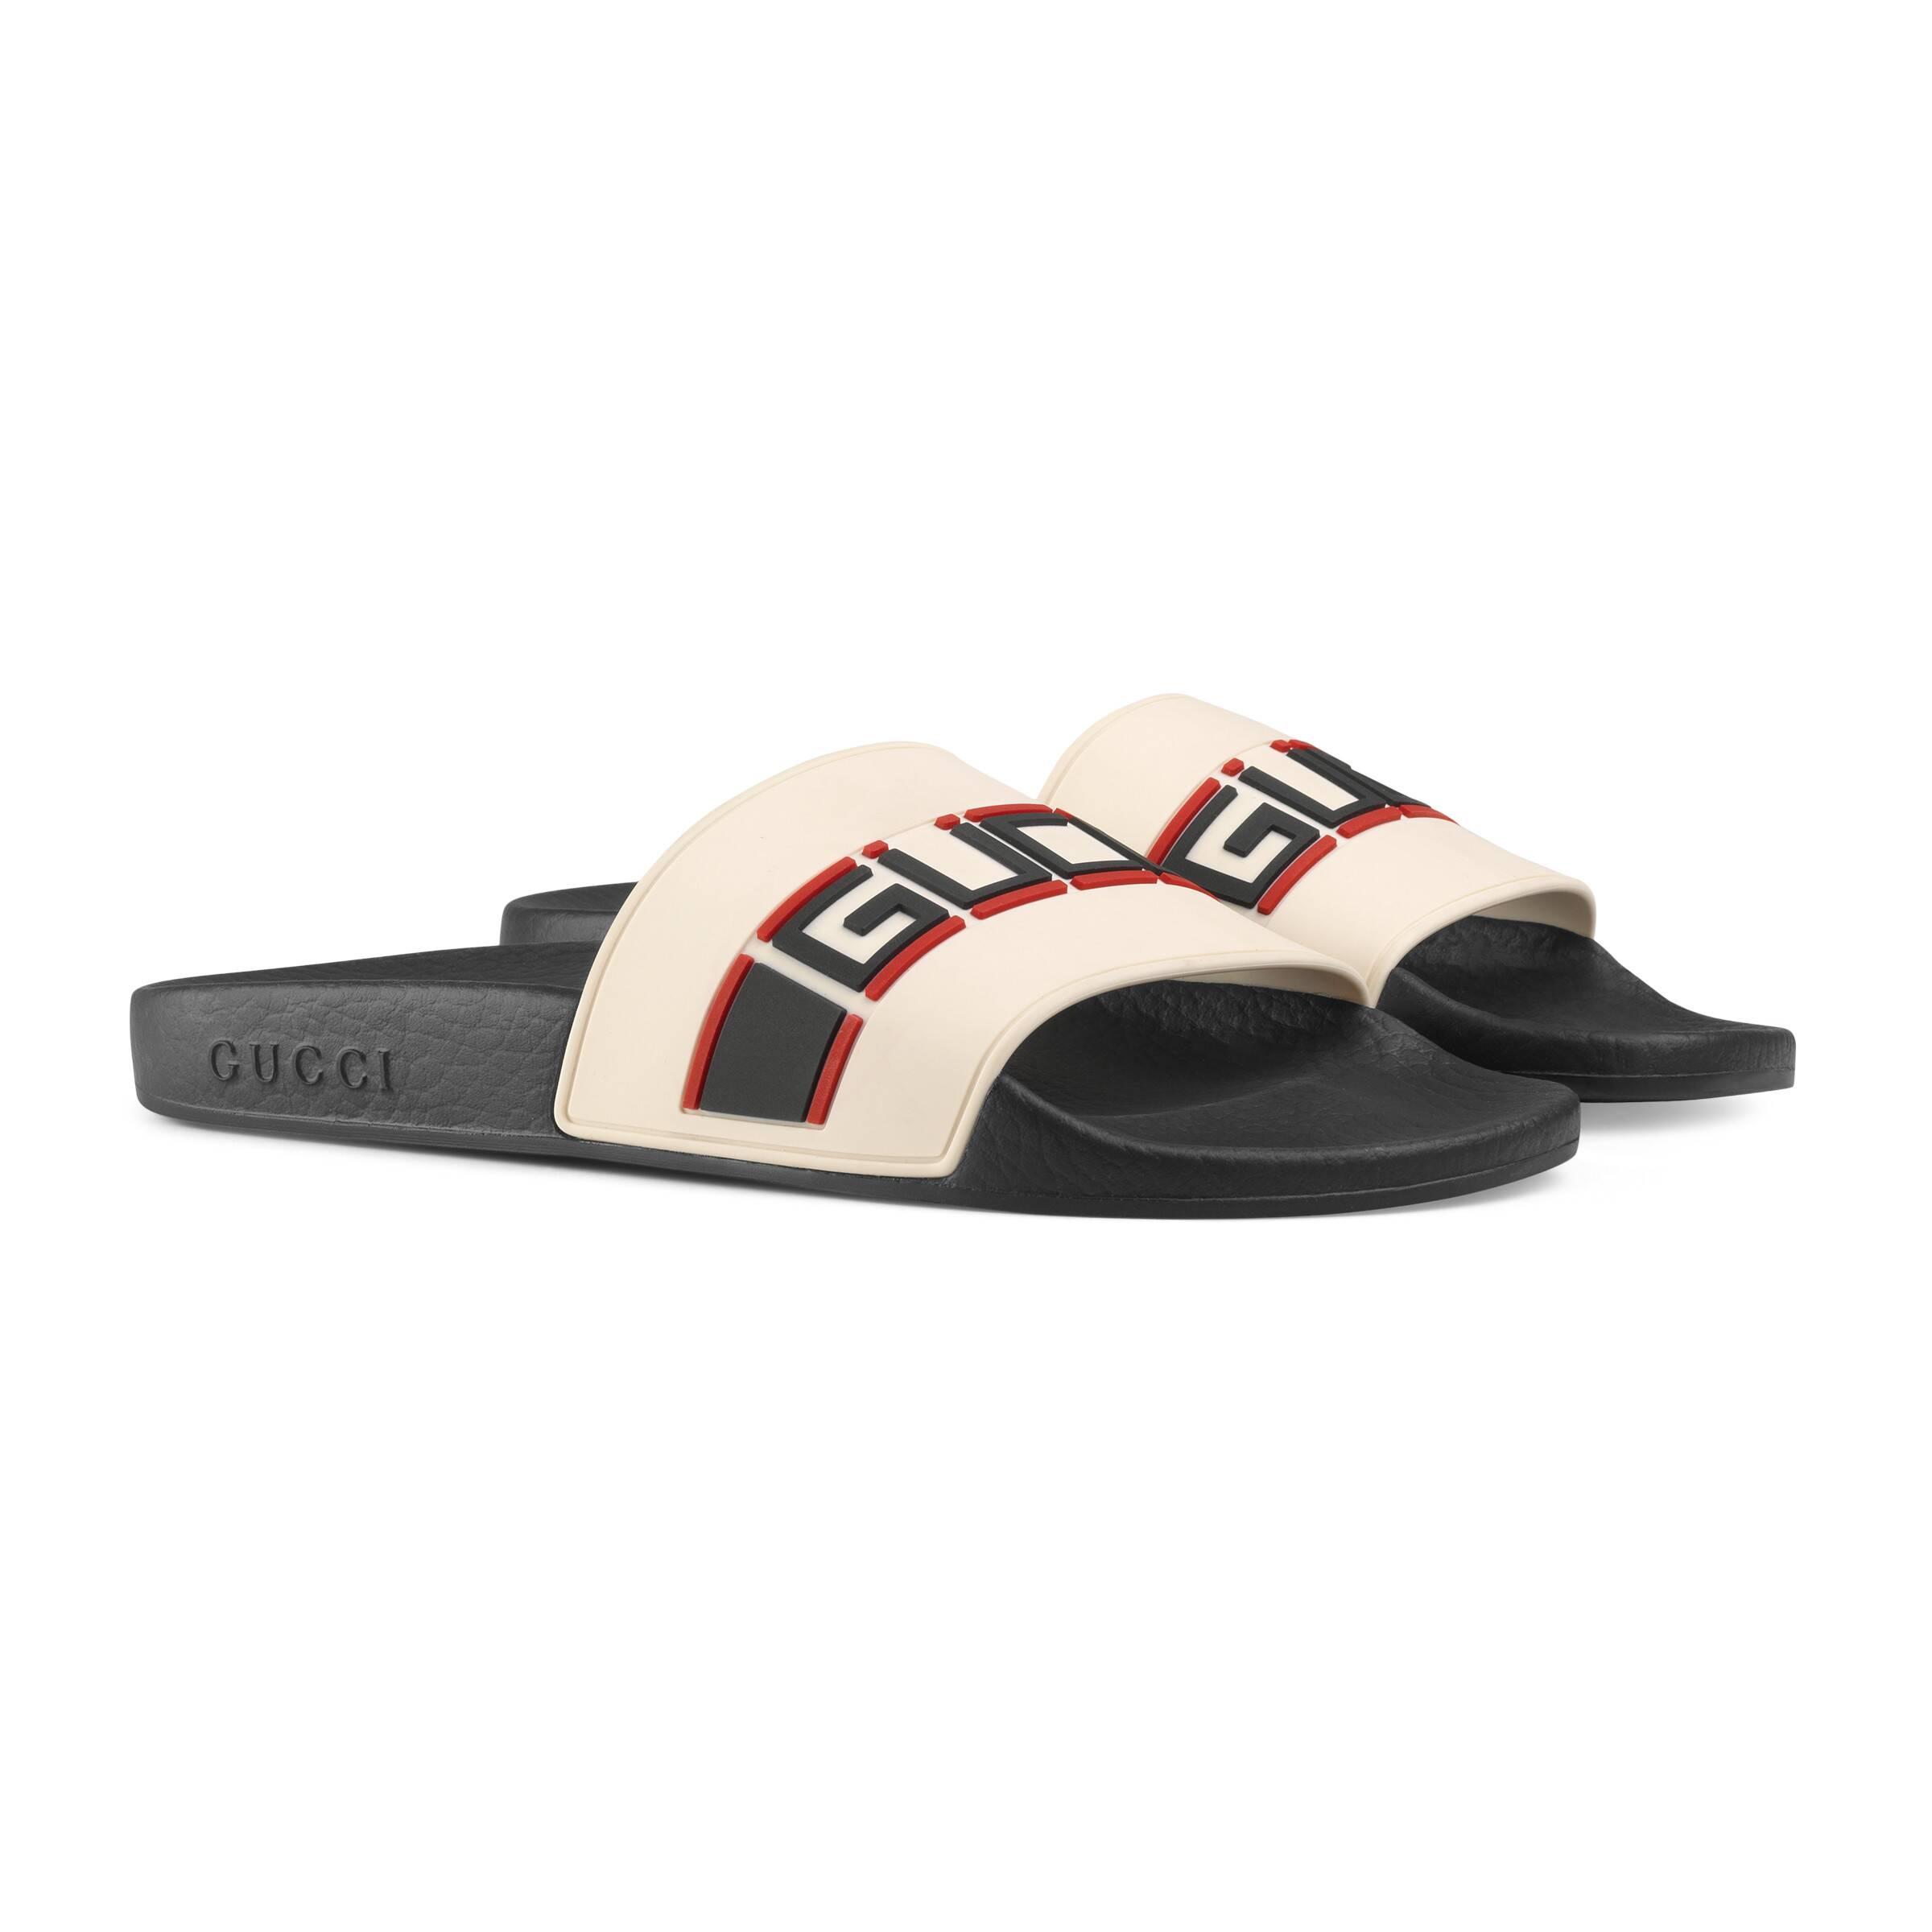 Gucci Stripe Rubber Slide Sandal in White - Lyst